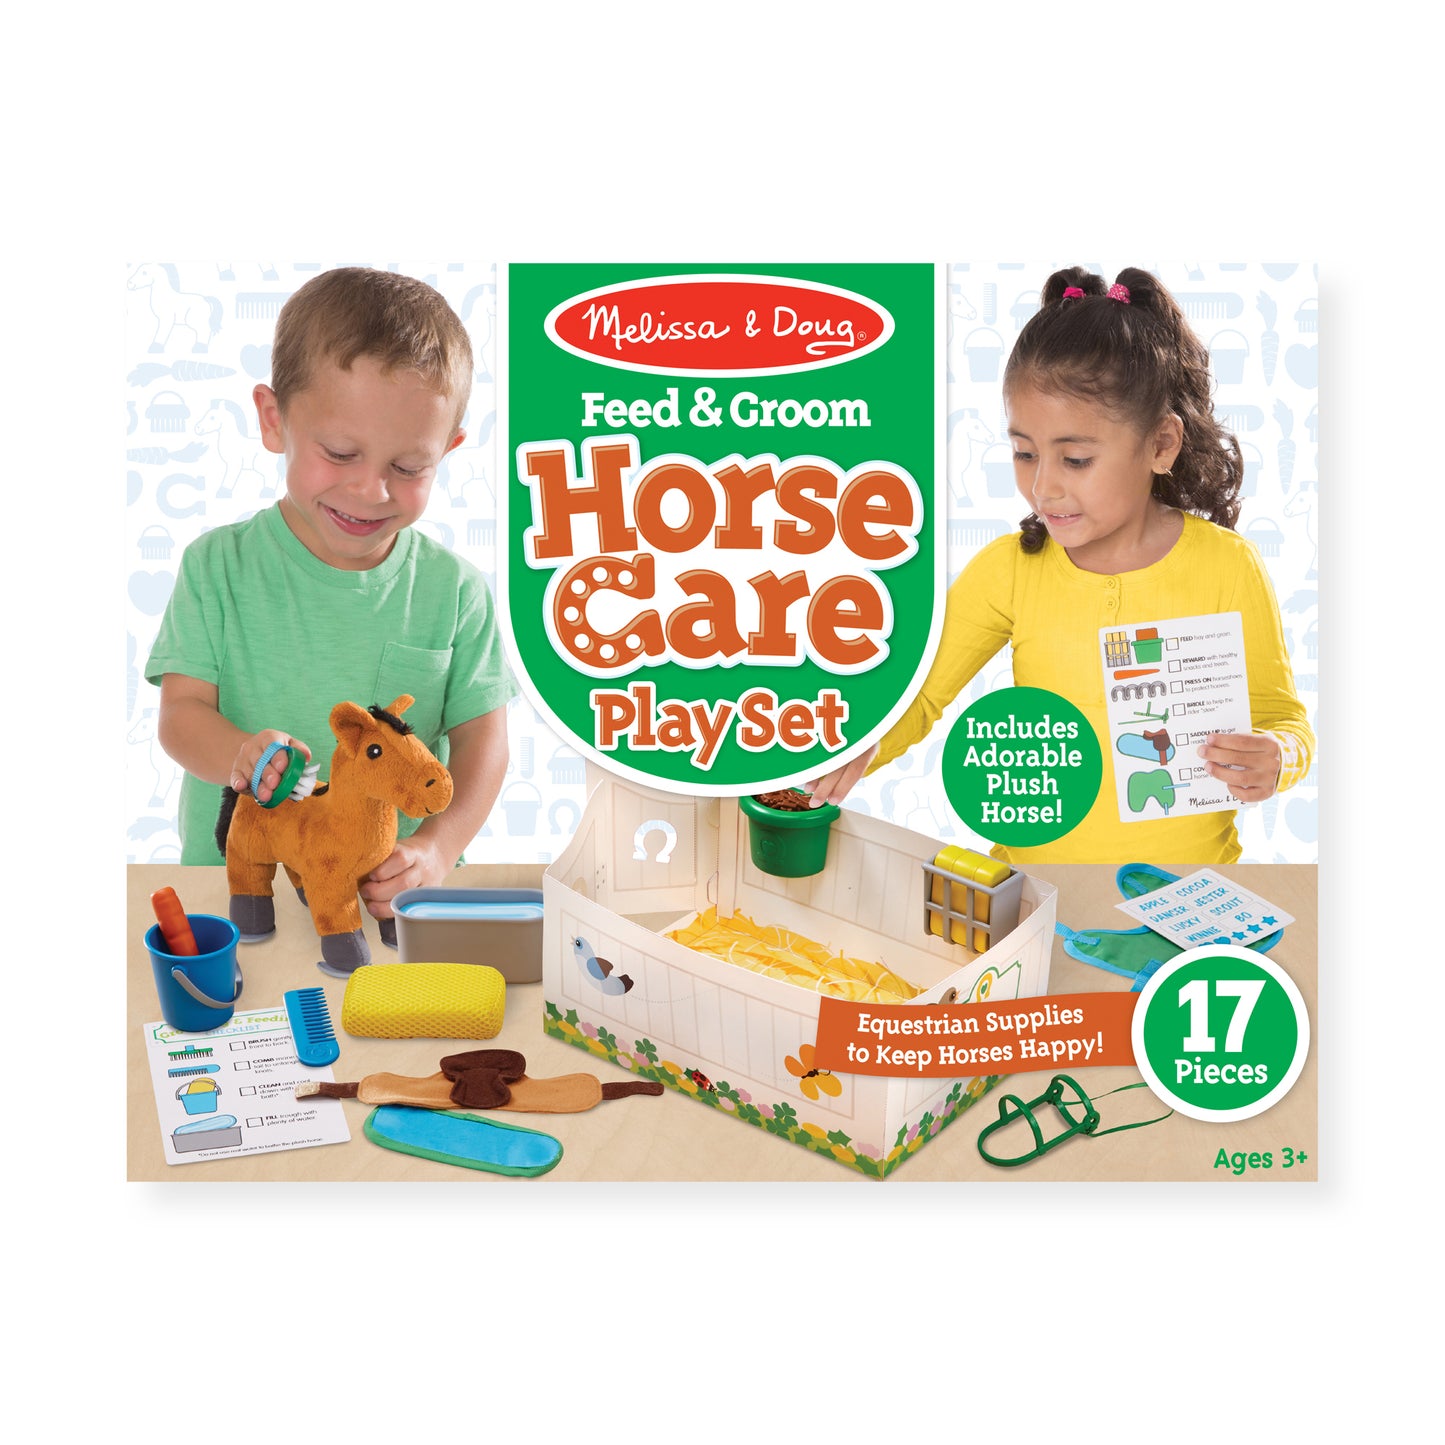 Feed & Groom Horse Care Playset